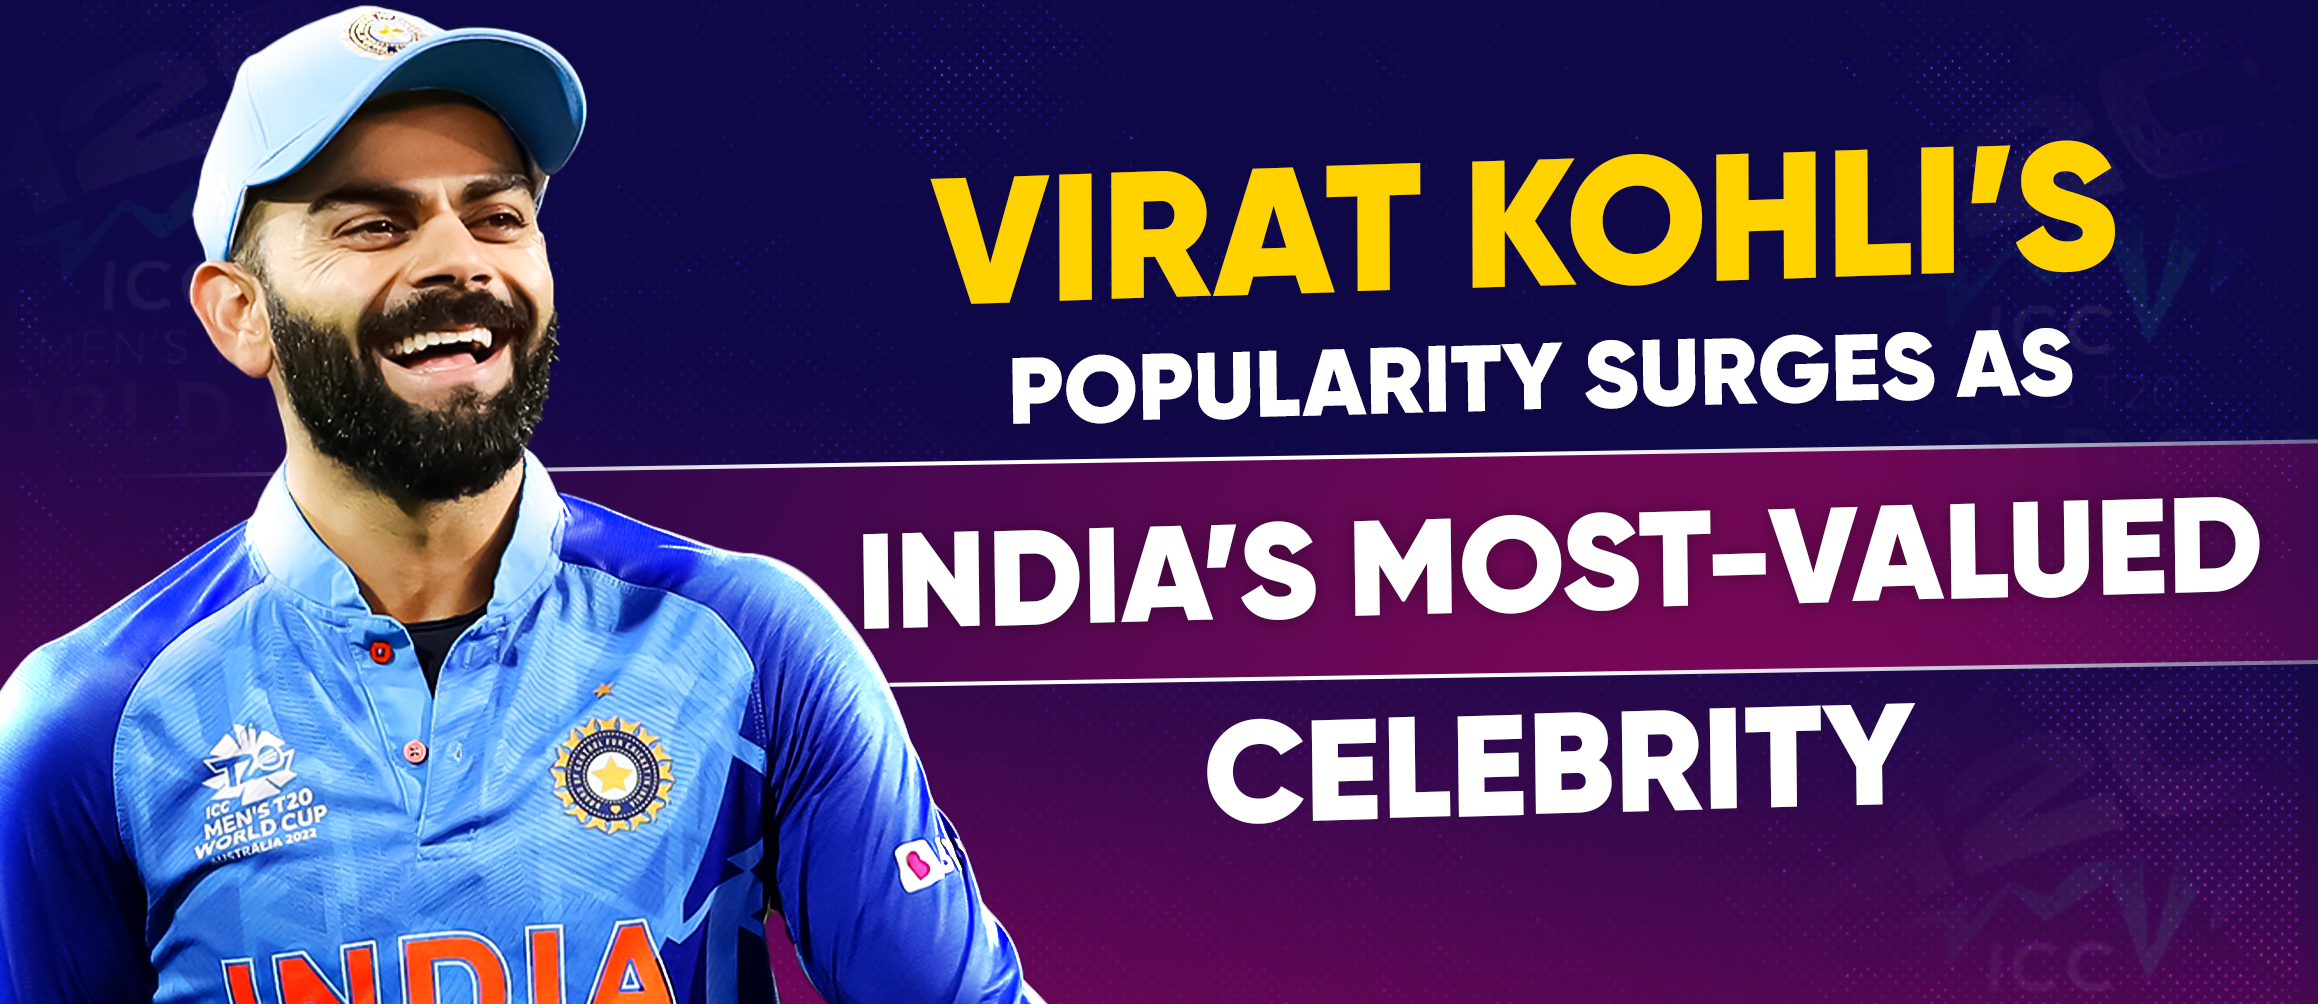 Virat Kohli’s Popularity Surges as India’s Most-Valued Celebrity